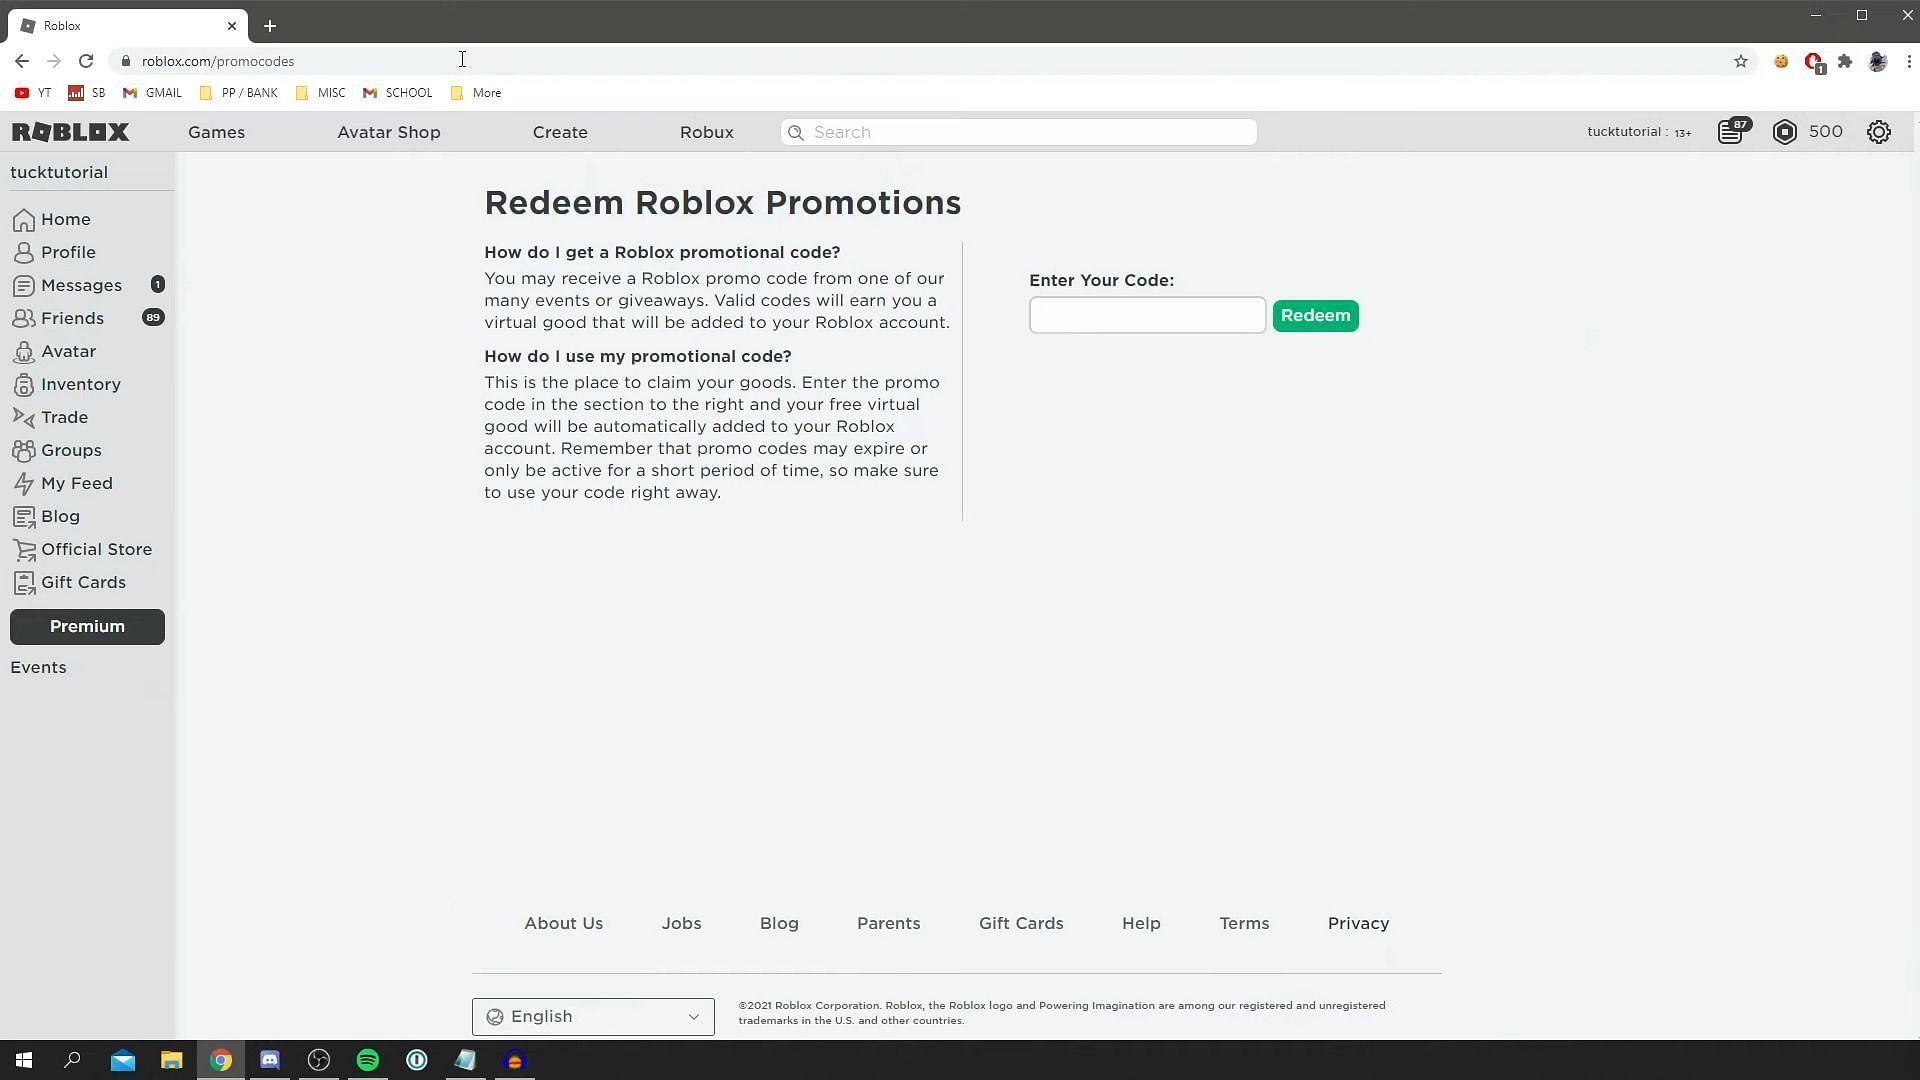 RoCodes: Submit, Follow, & Redeem Roblox Game Codes